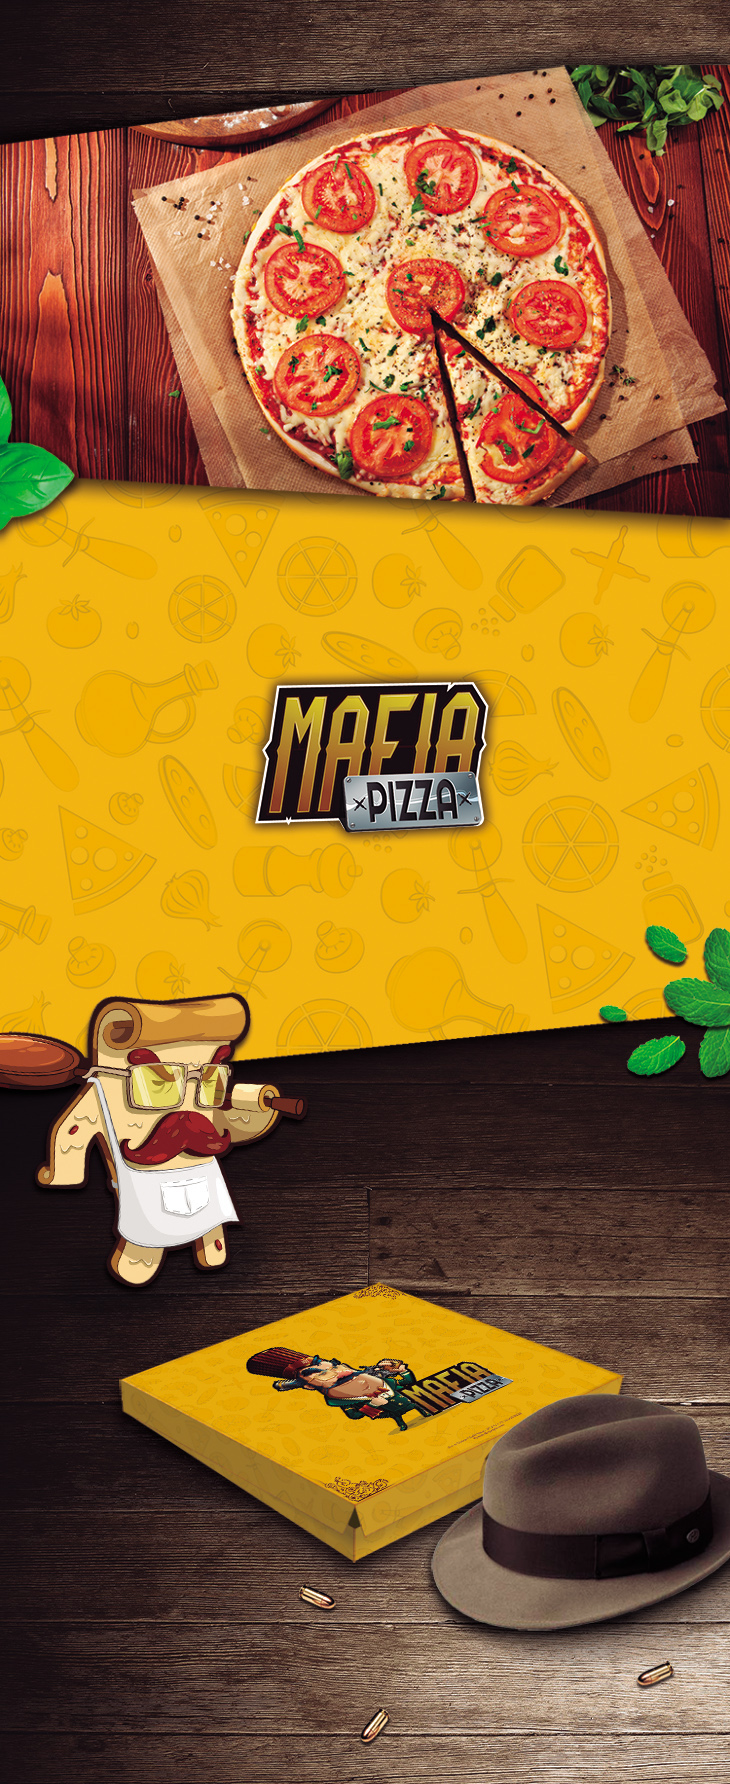 Pizza mafia Jimmy cudriz brand guns chef delicious vector restaurant menu pepperoni Behance